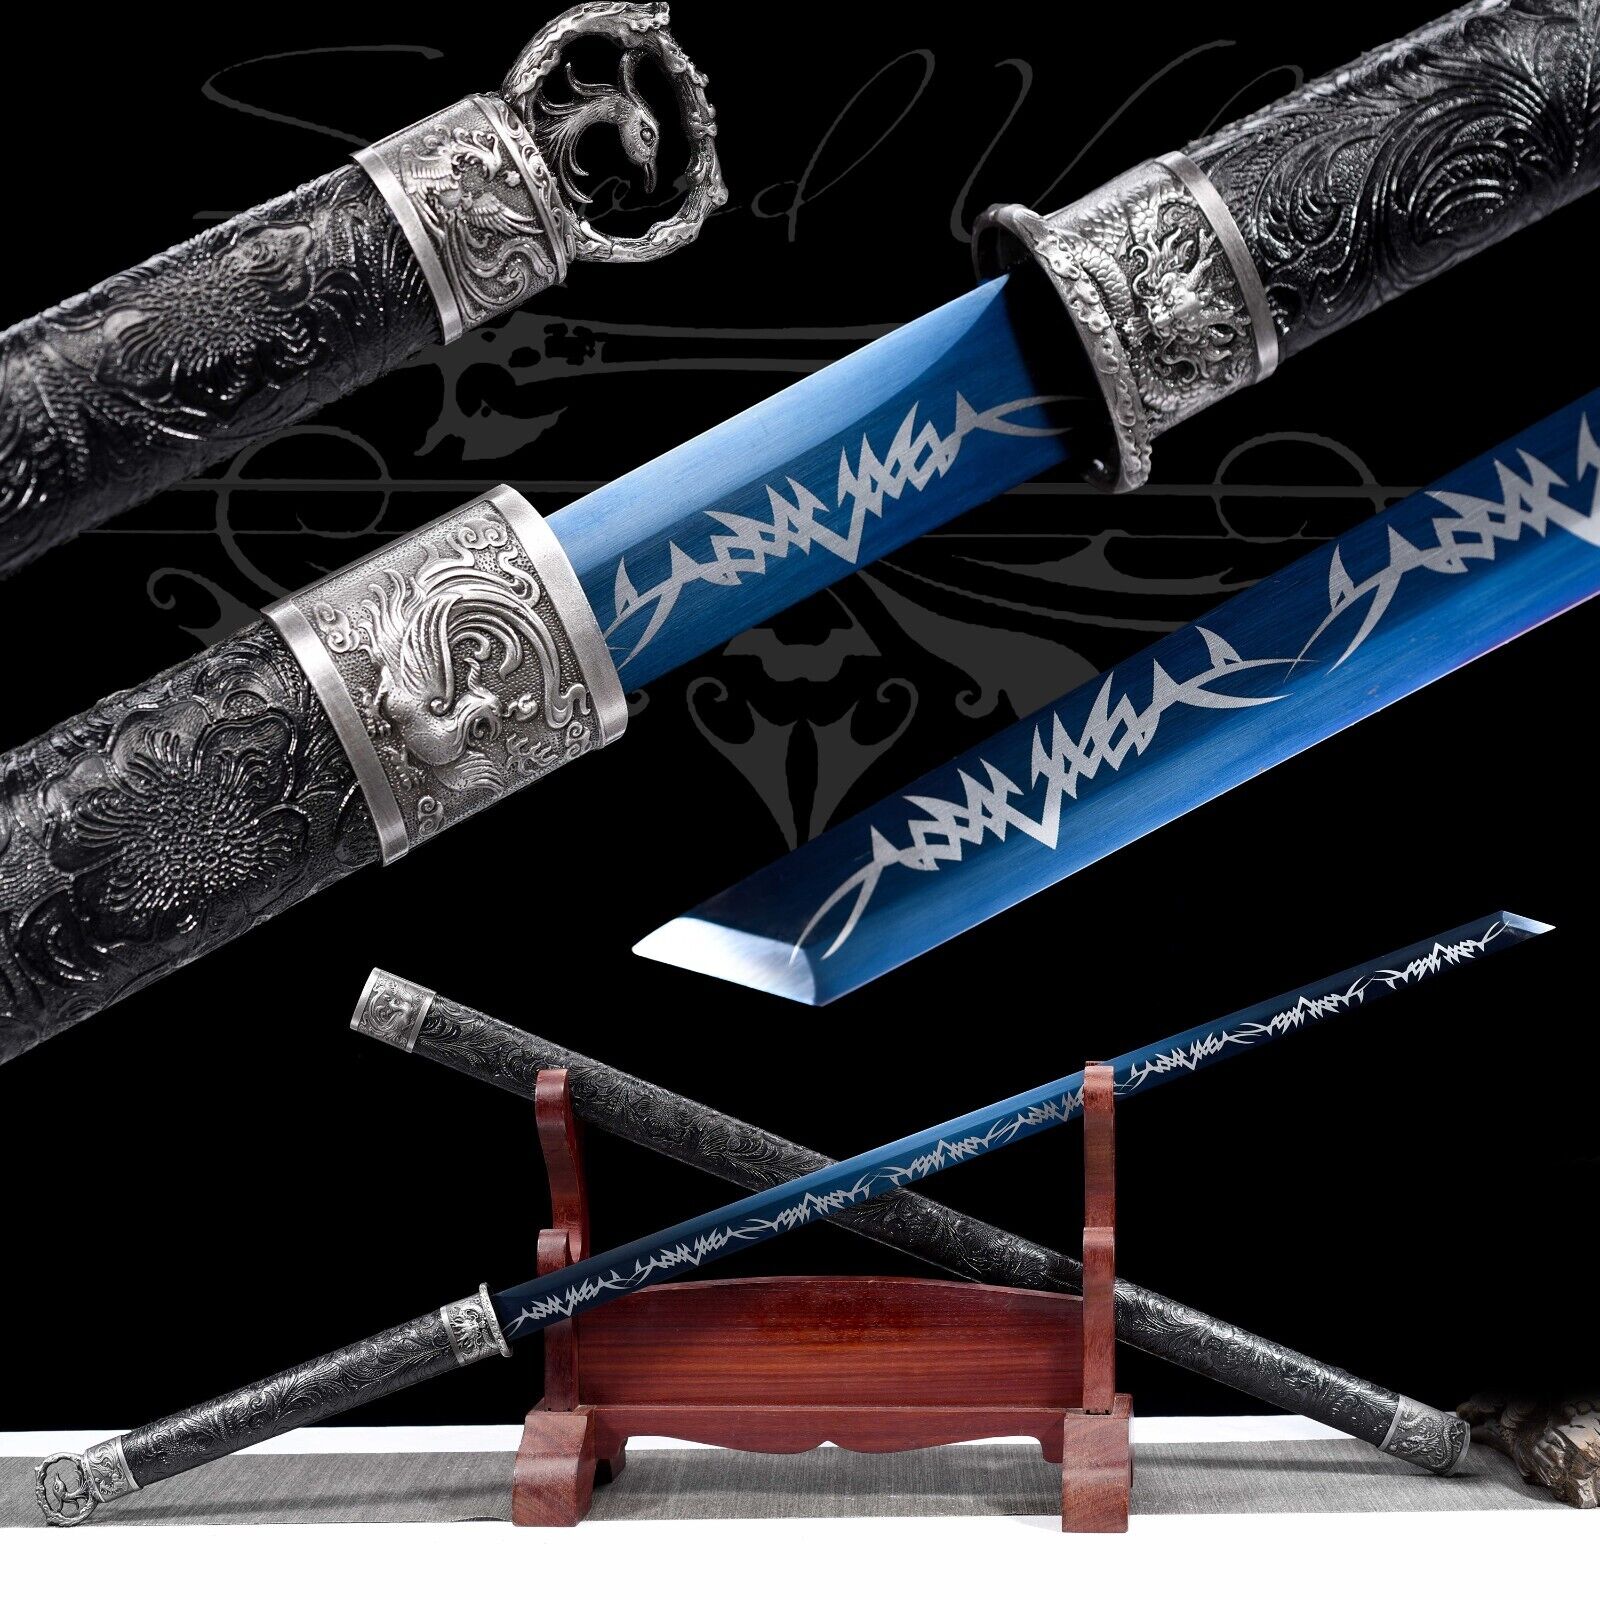 Handmade Sword/Manganese Steel/Full Tang/Real Katana/Sharpe/Battle Ready/Combat